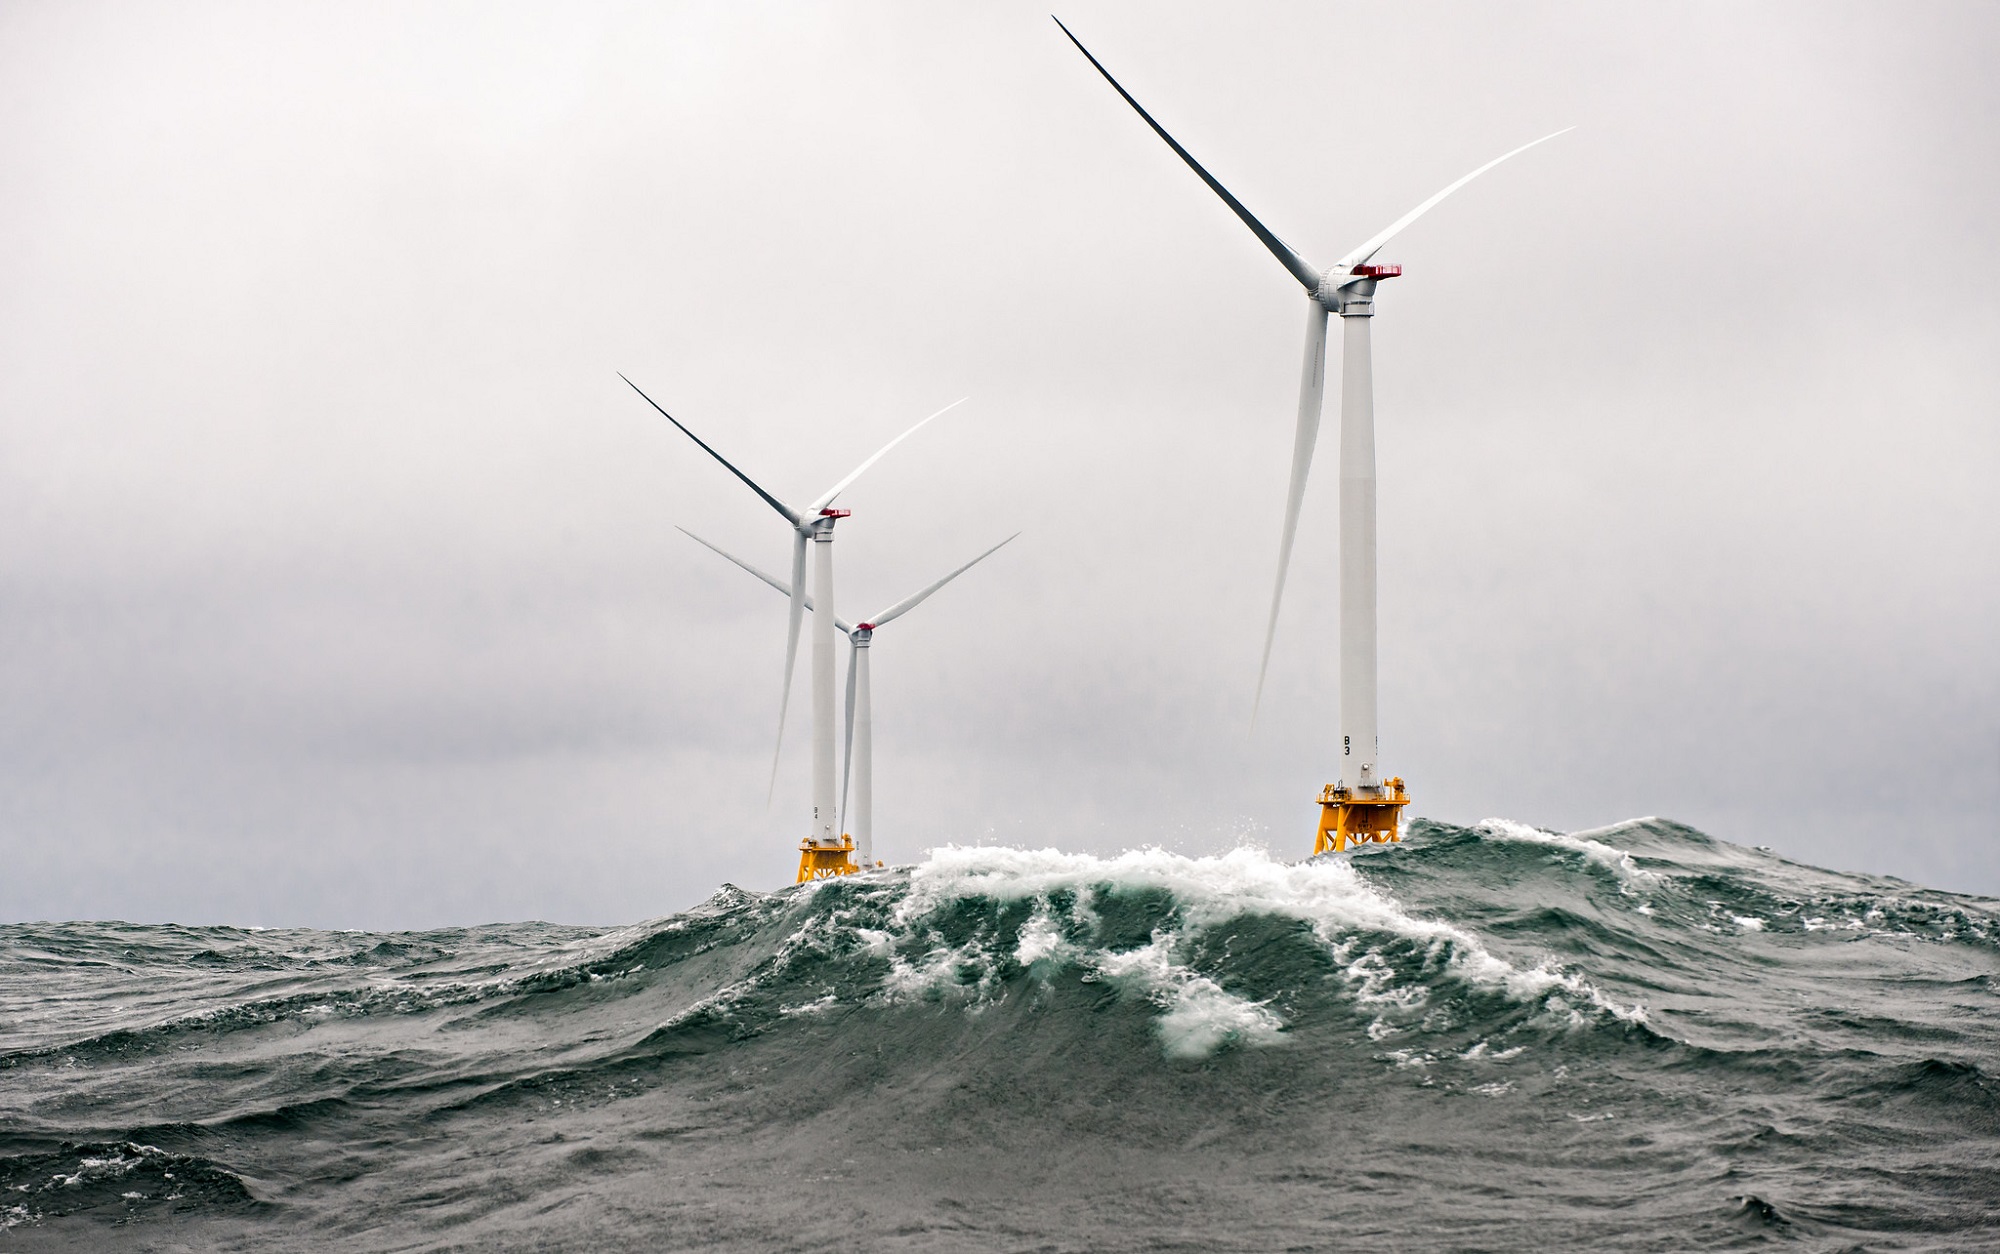 Two wind farm turbines in choppy waves under a stormy sky